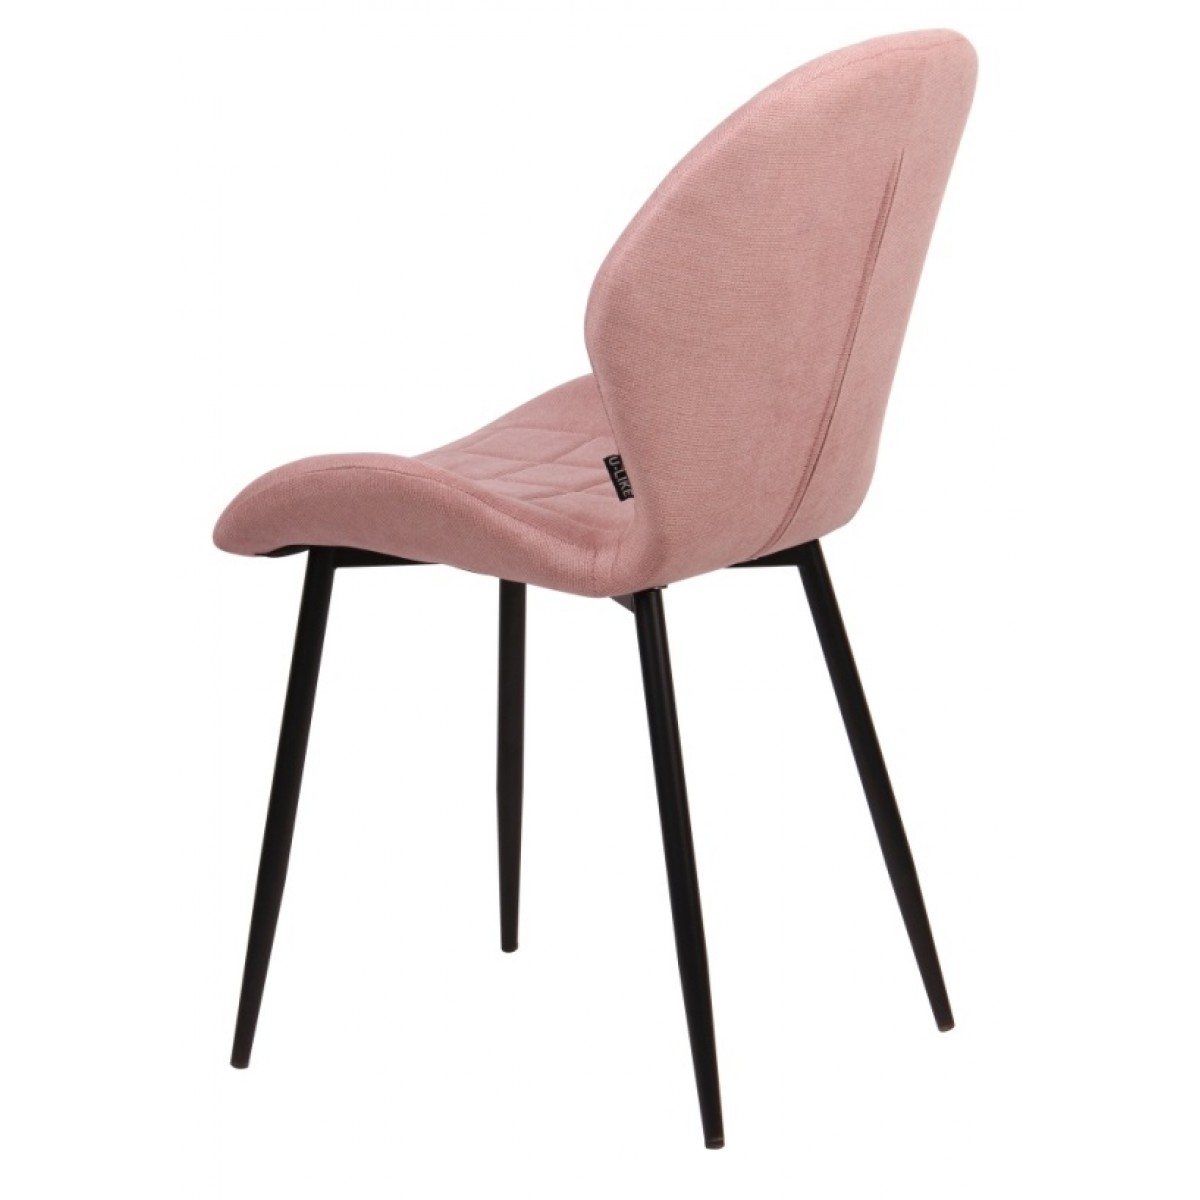 M-City стул Flower pk-07 розовый, ткань микрофибра